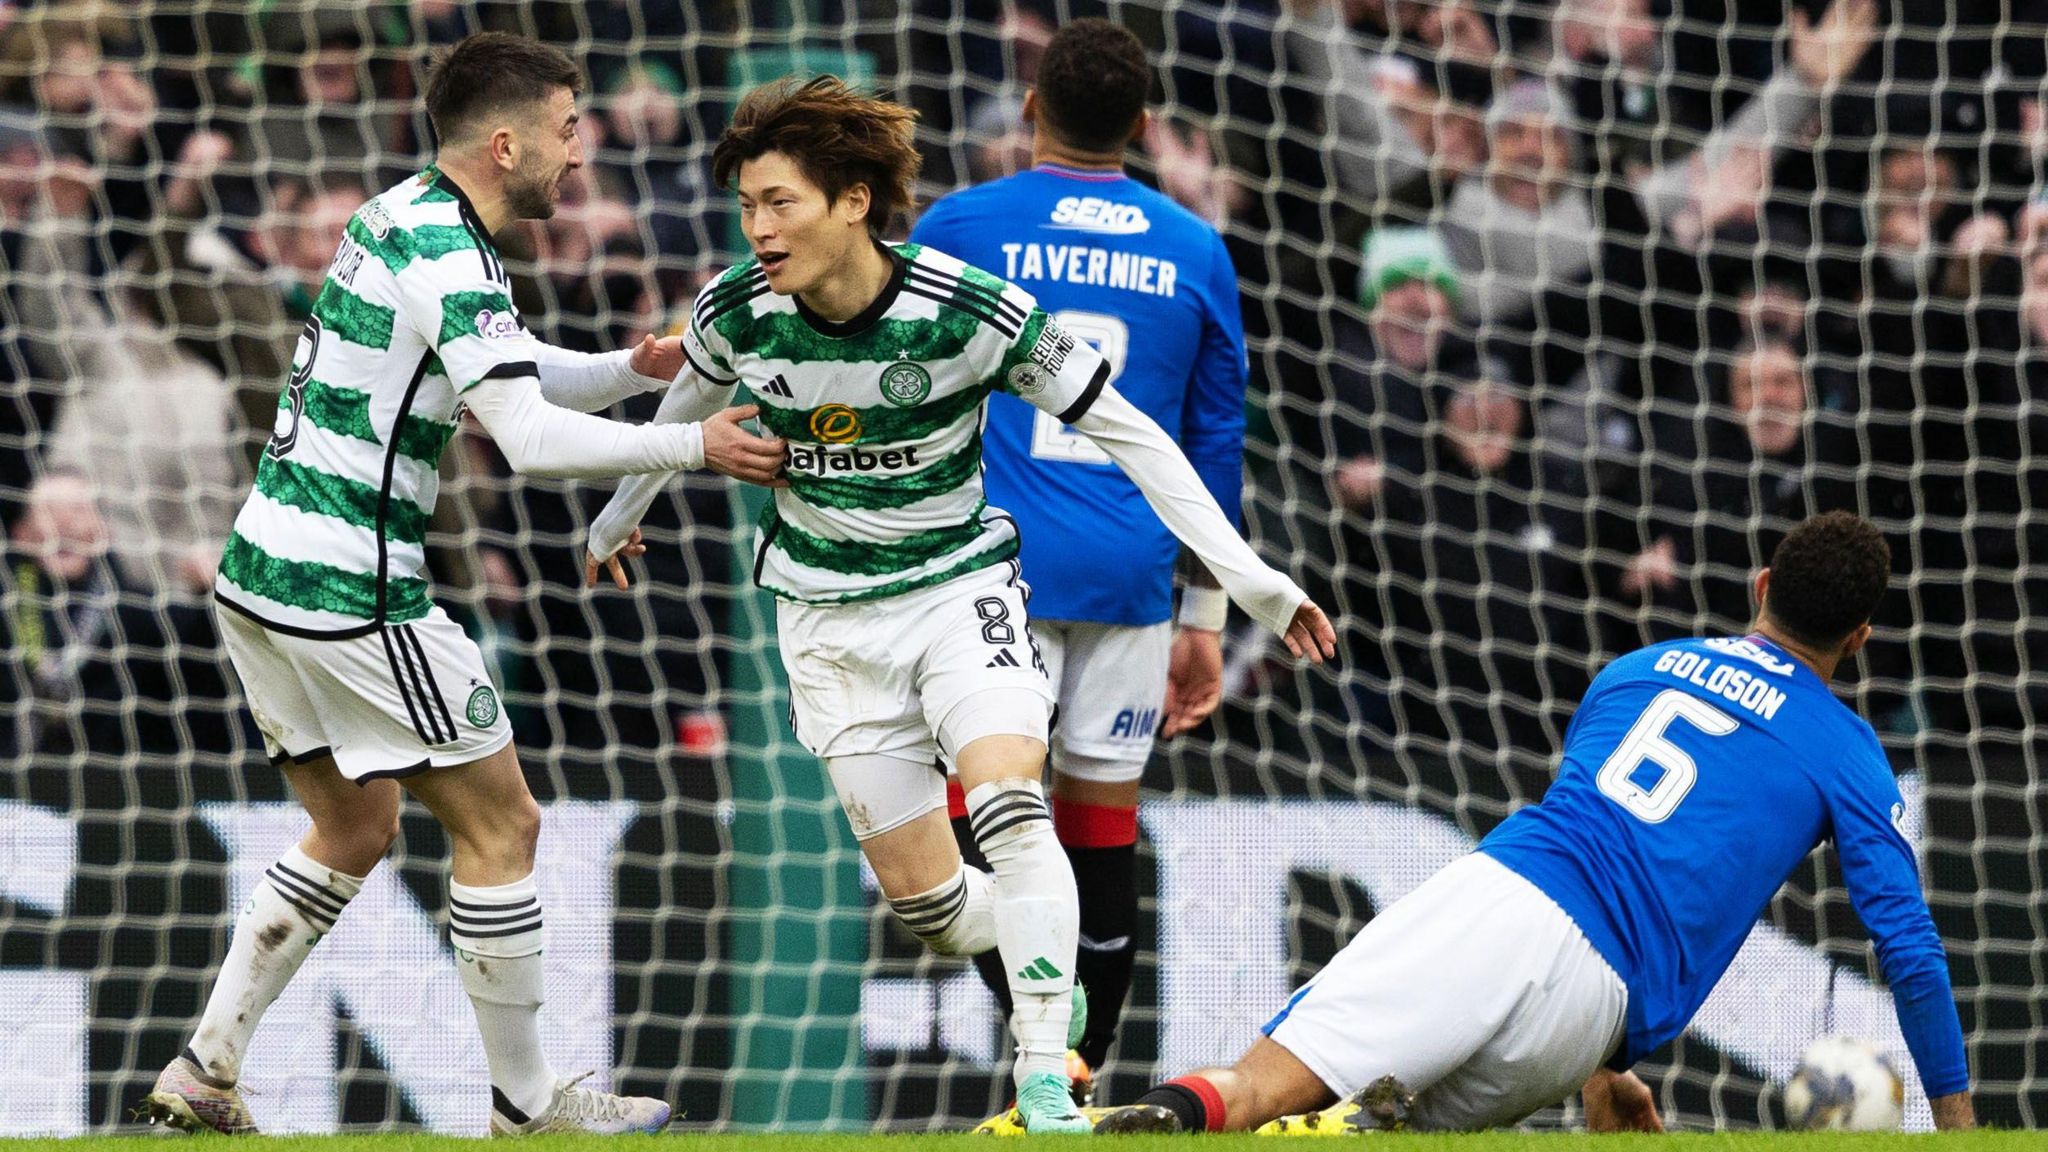 Kyogo Furuhashi celebrates after scoring for Celtic against Rangers